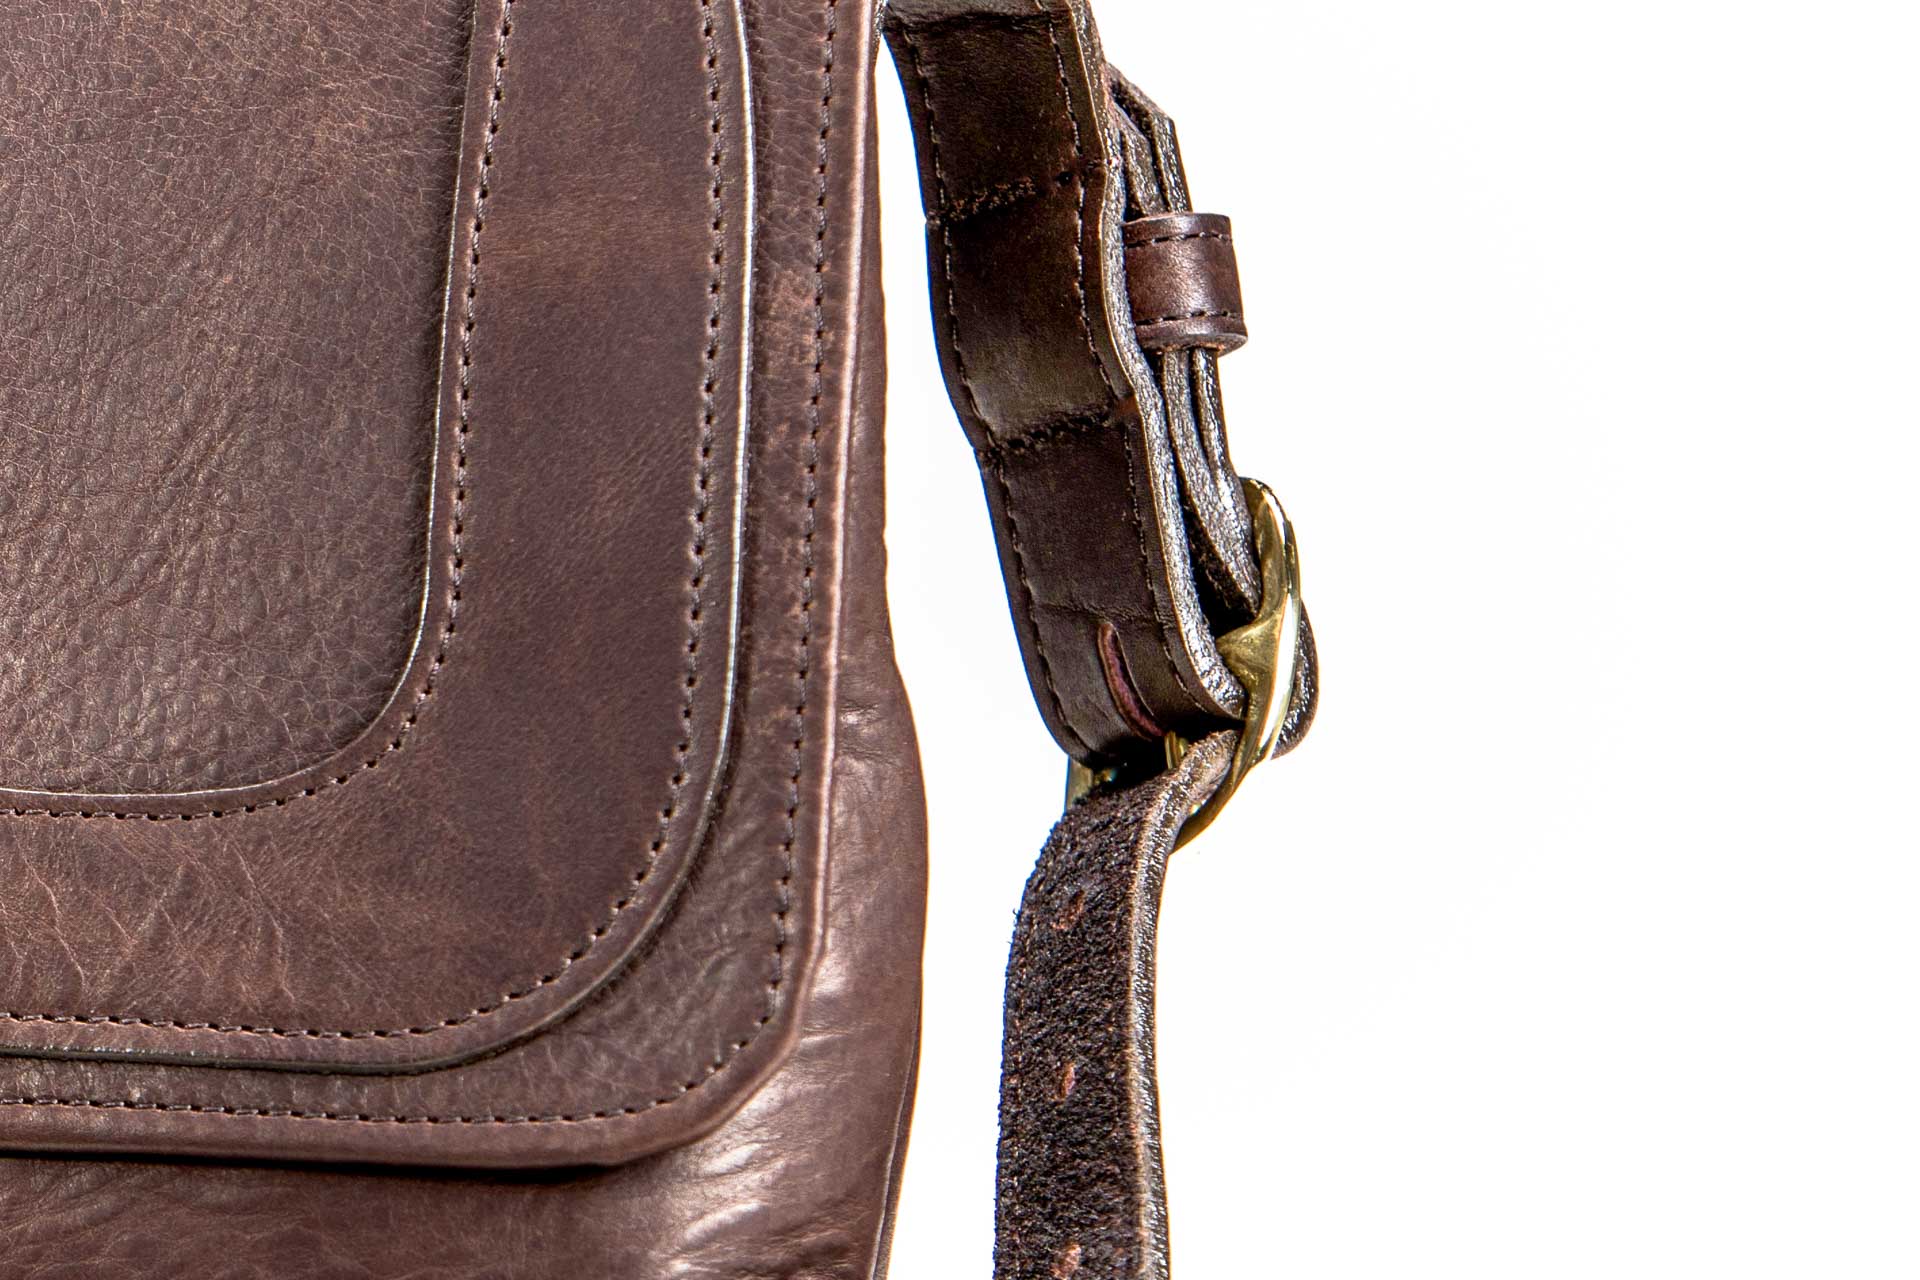 Trim Style Purse - Made in America - Buffalo Leather